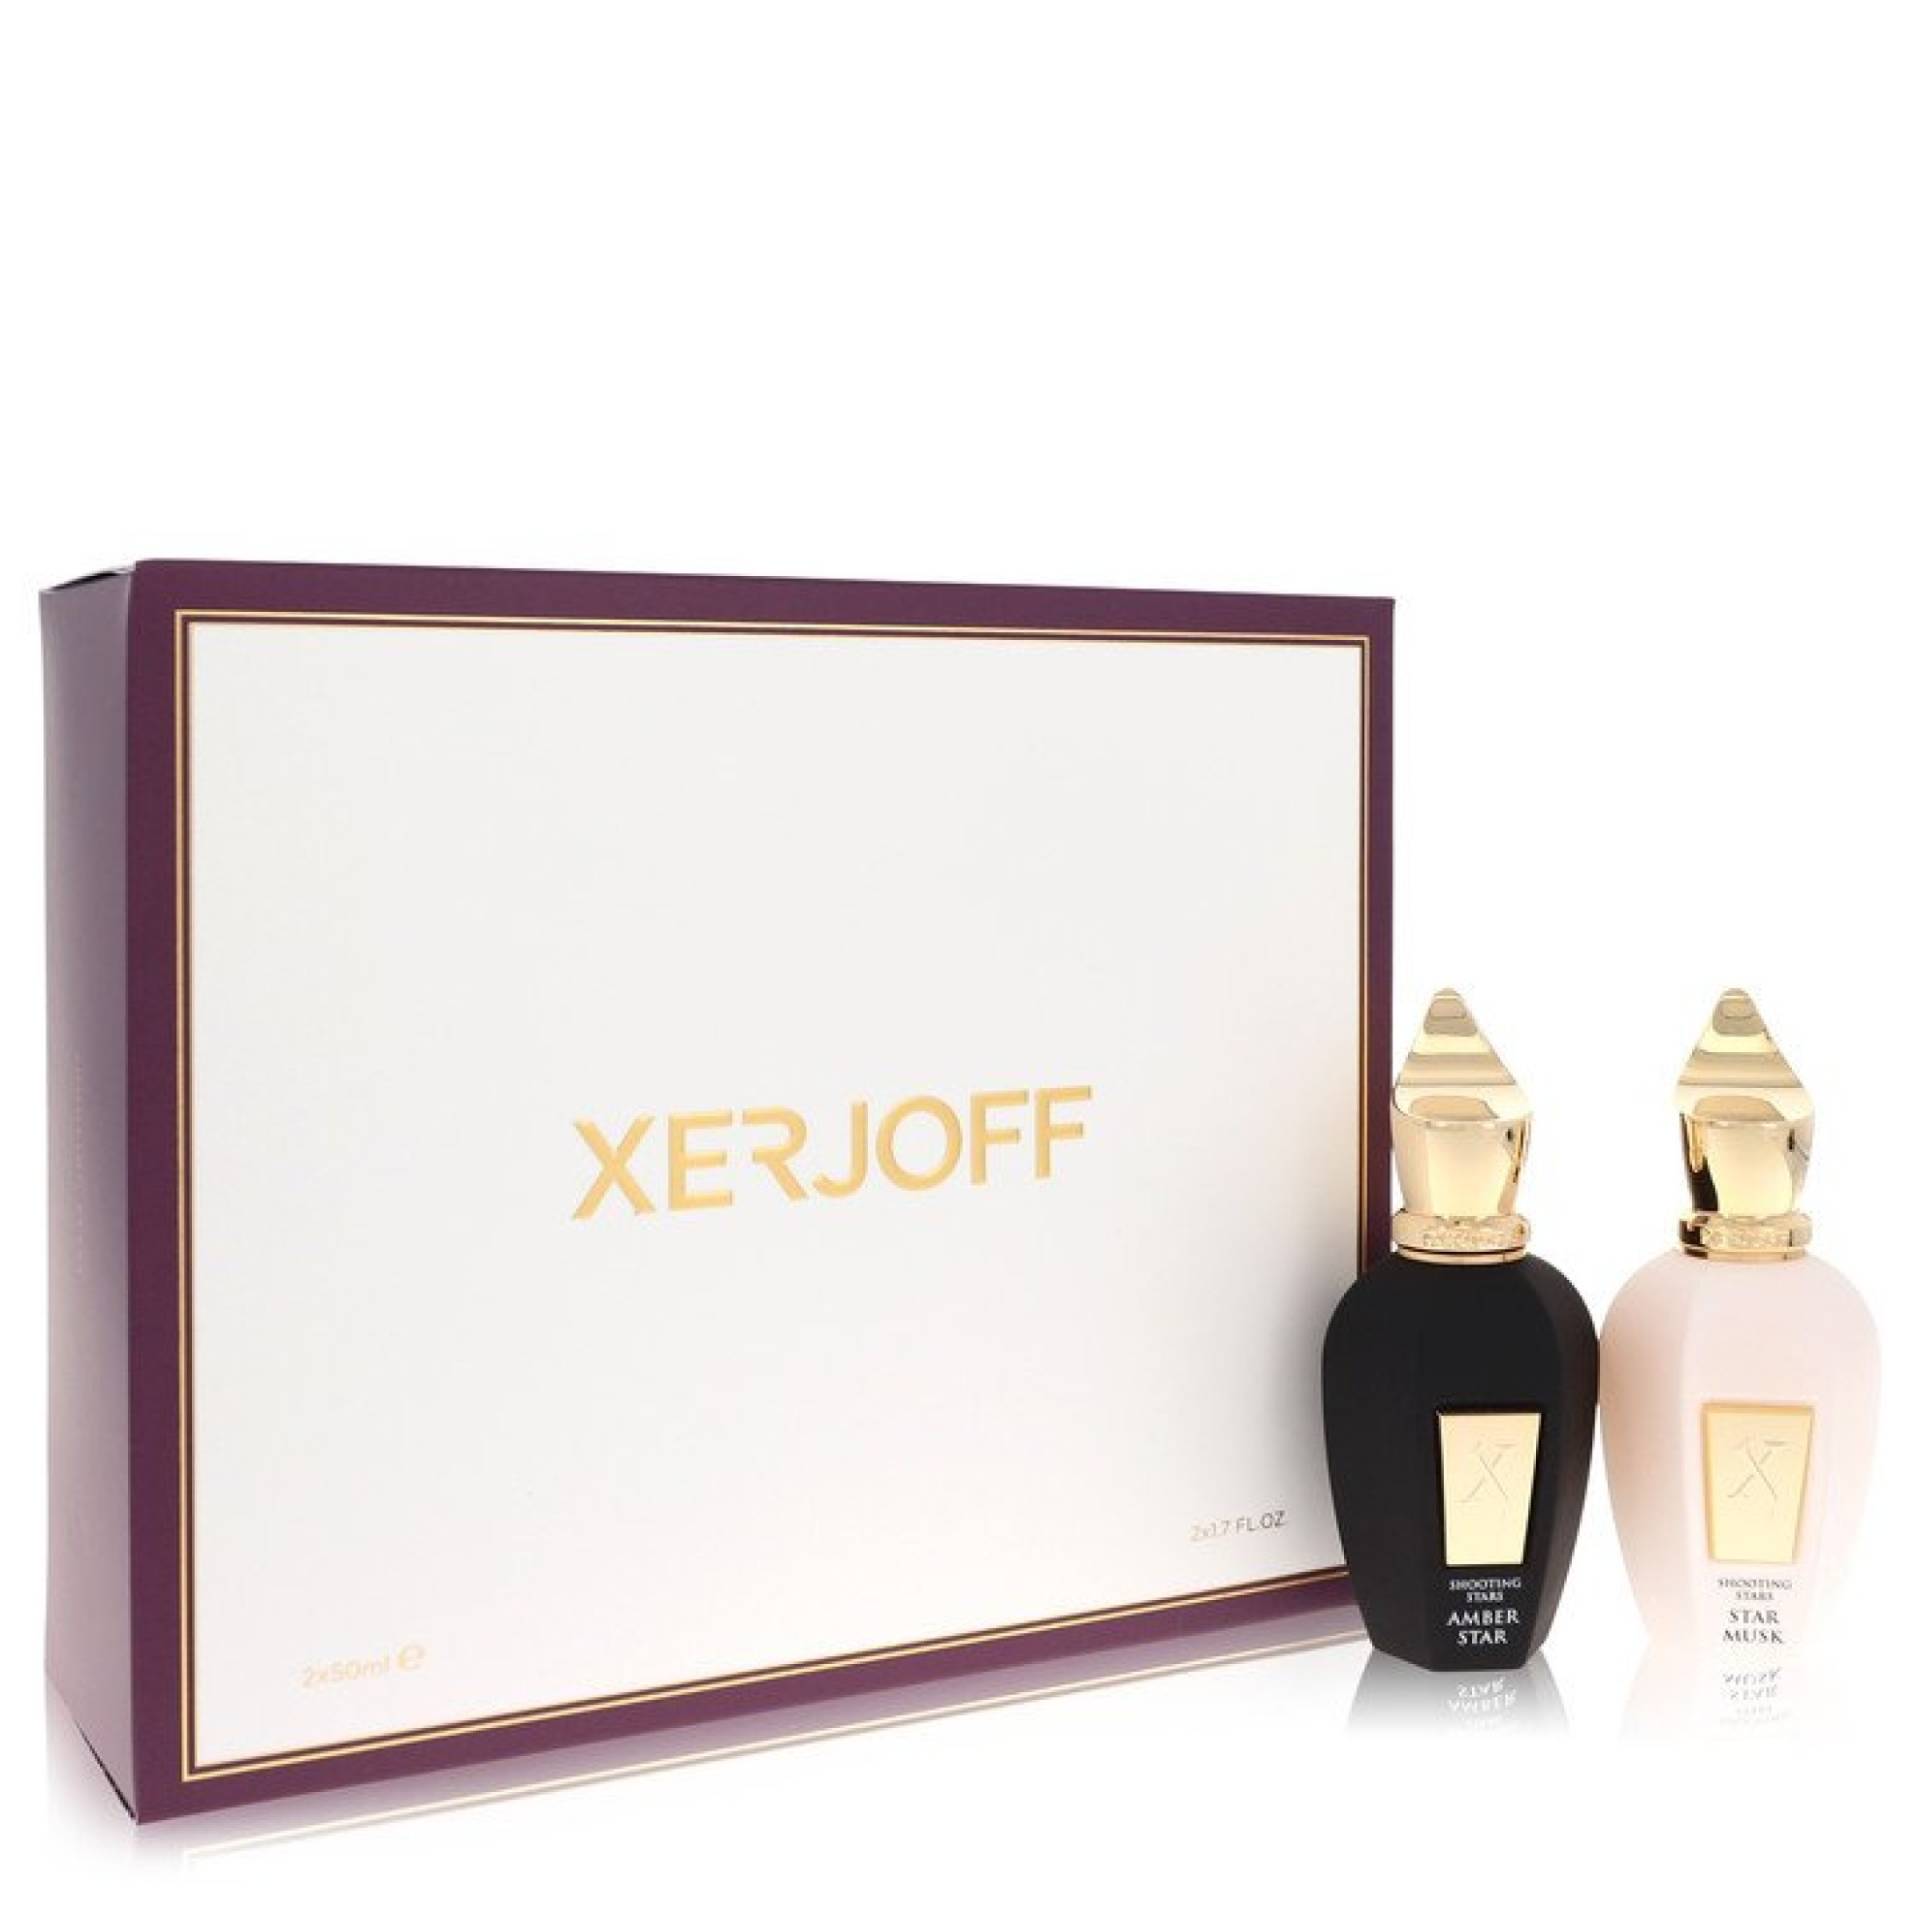 Xerjoff Shooting Stars Amber Star & Star Musk Gift Set -- 50 ml EDP in Amber Star + 50 ml EDP in Star Musk Both Unisex Fragrances von Xerjoff